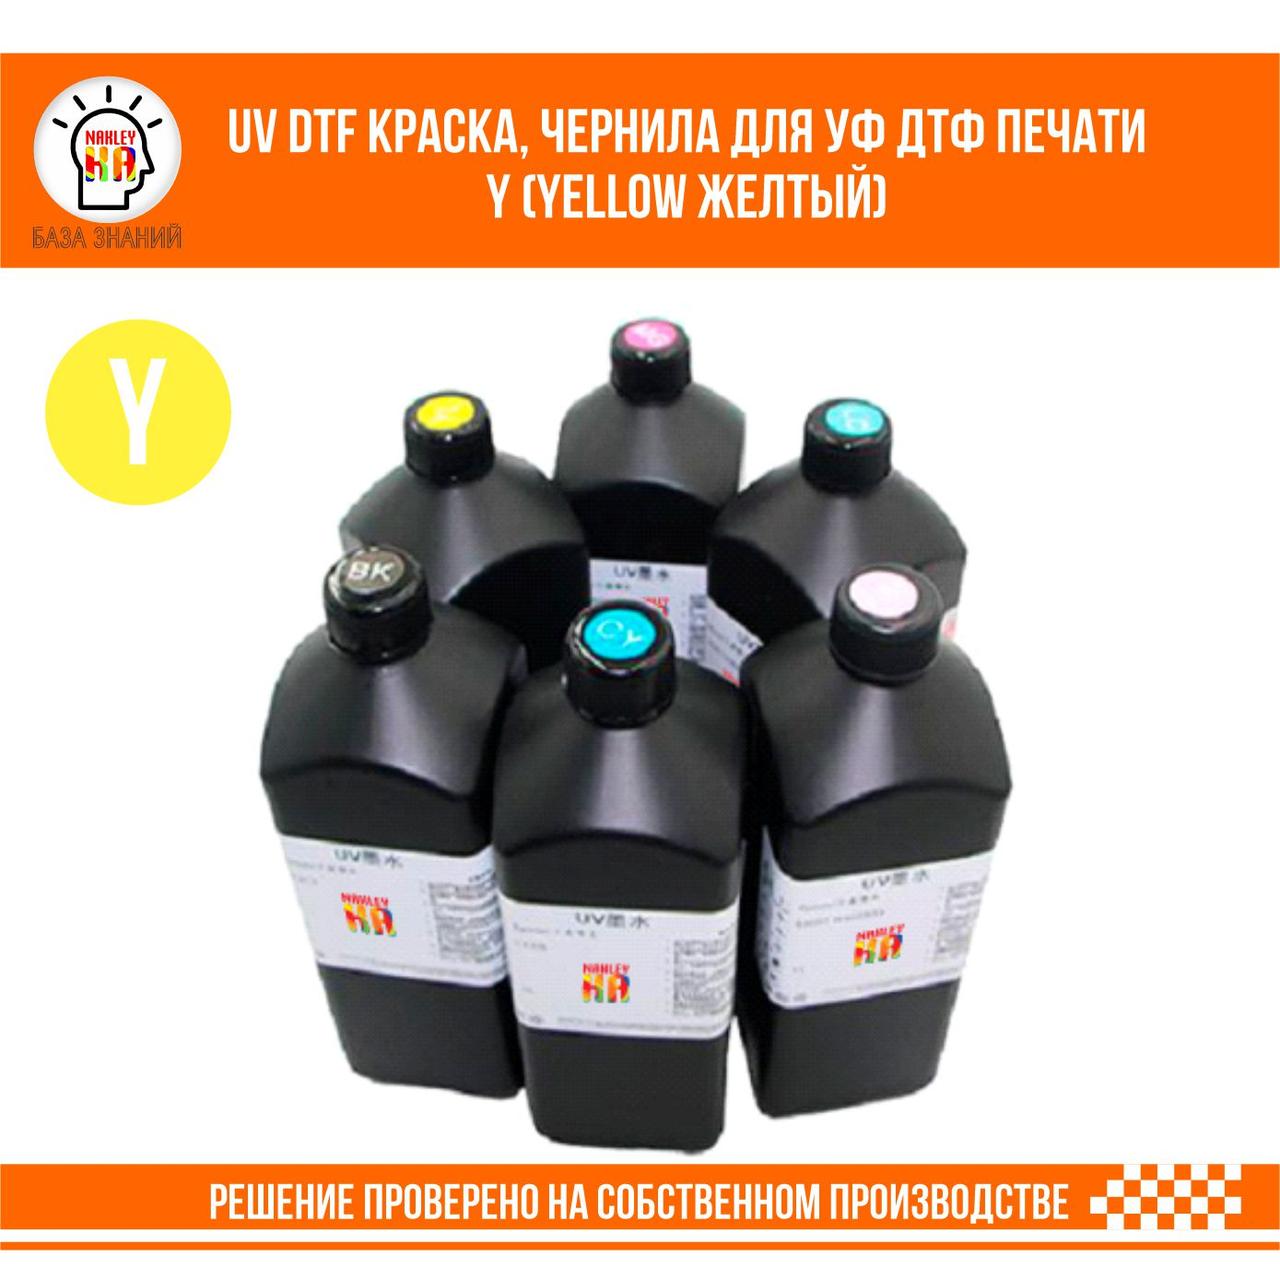 UV DTF краска, чернила для УФ ДТФ печати Y (Yellow Желтый)